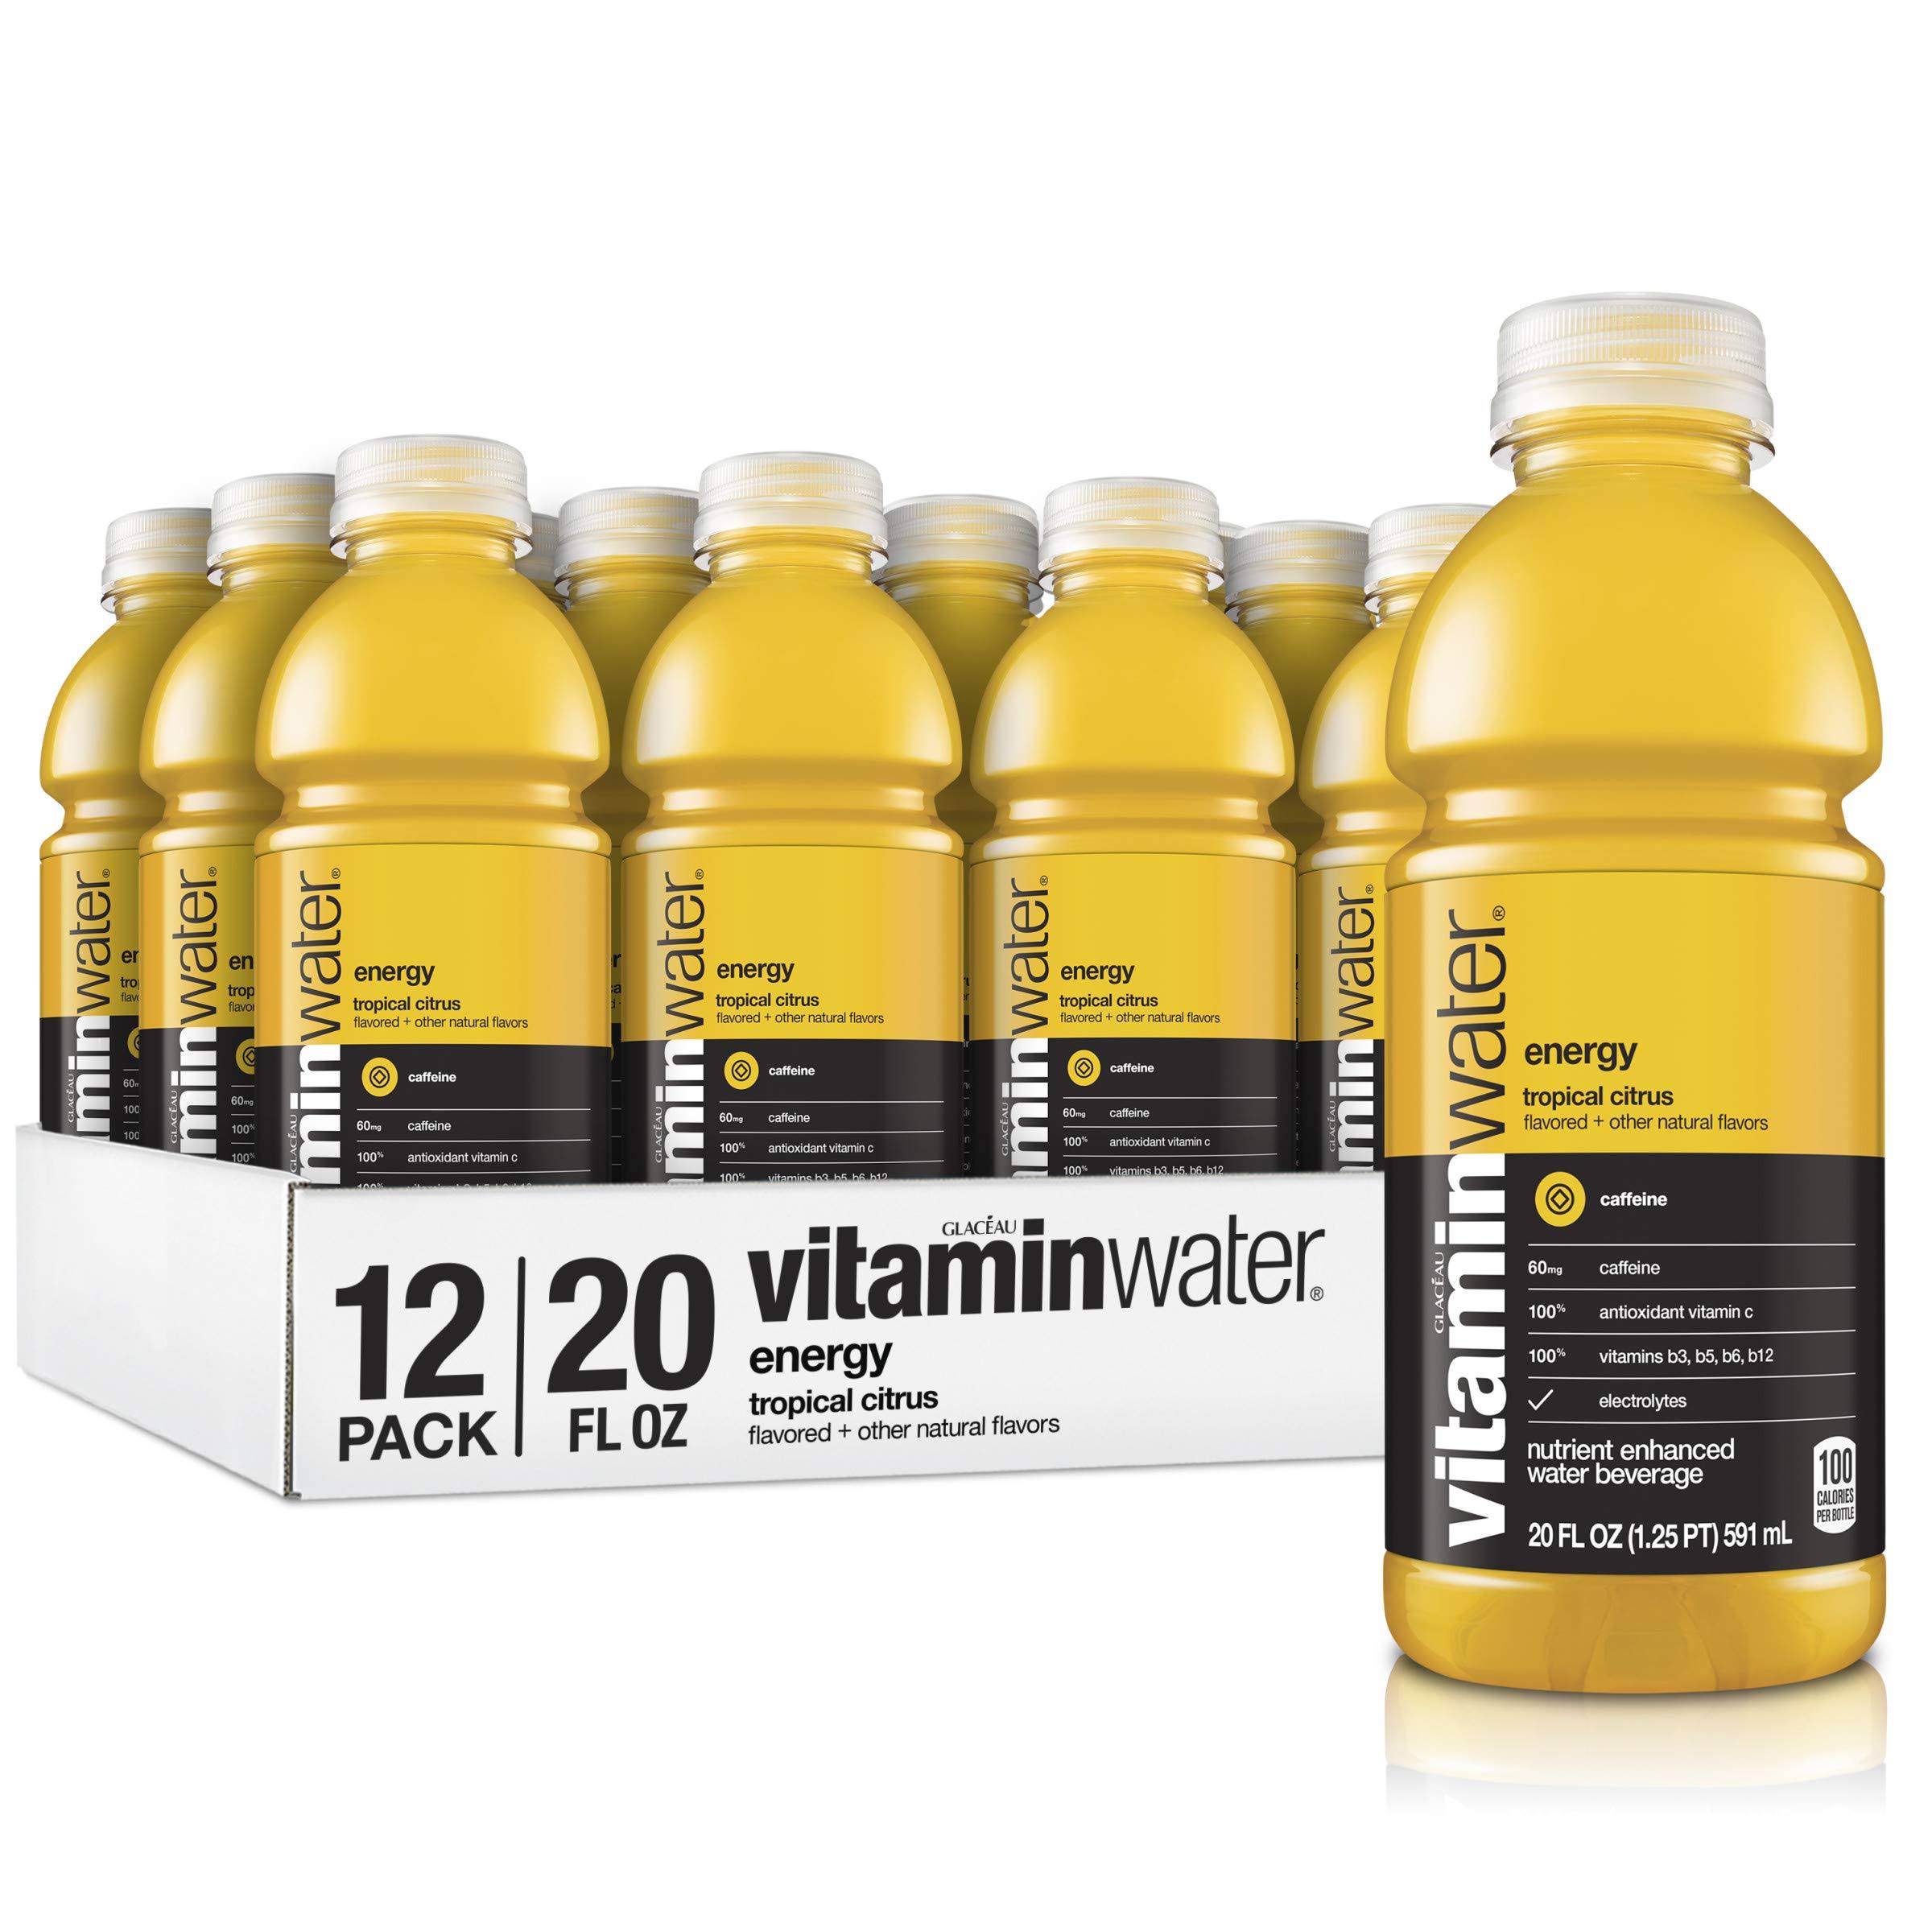 Vitamin Water Energy Nutrient Enhanced Beverage - Tropical Citrus, 20oz